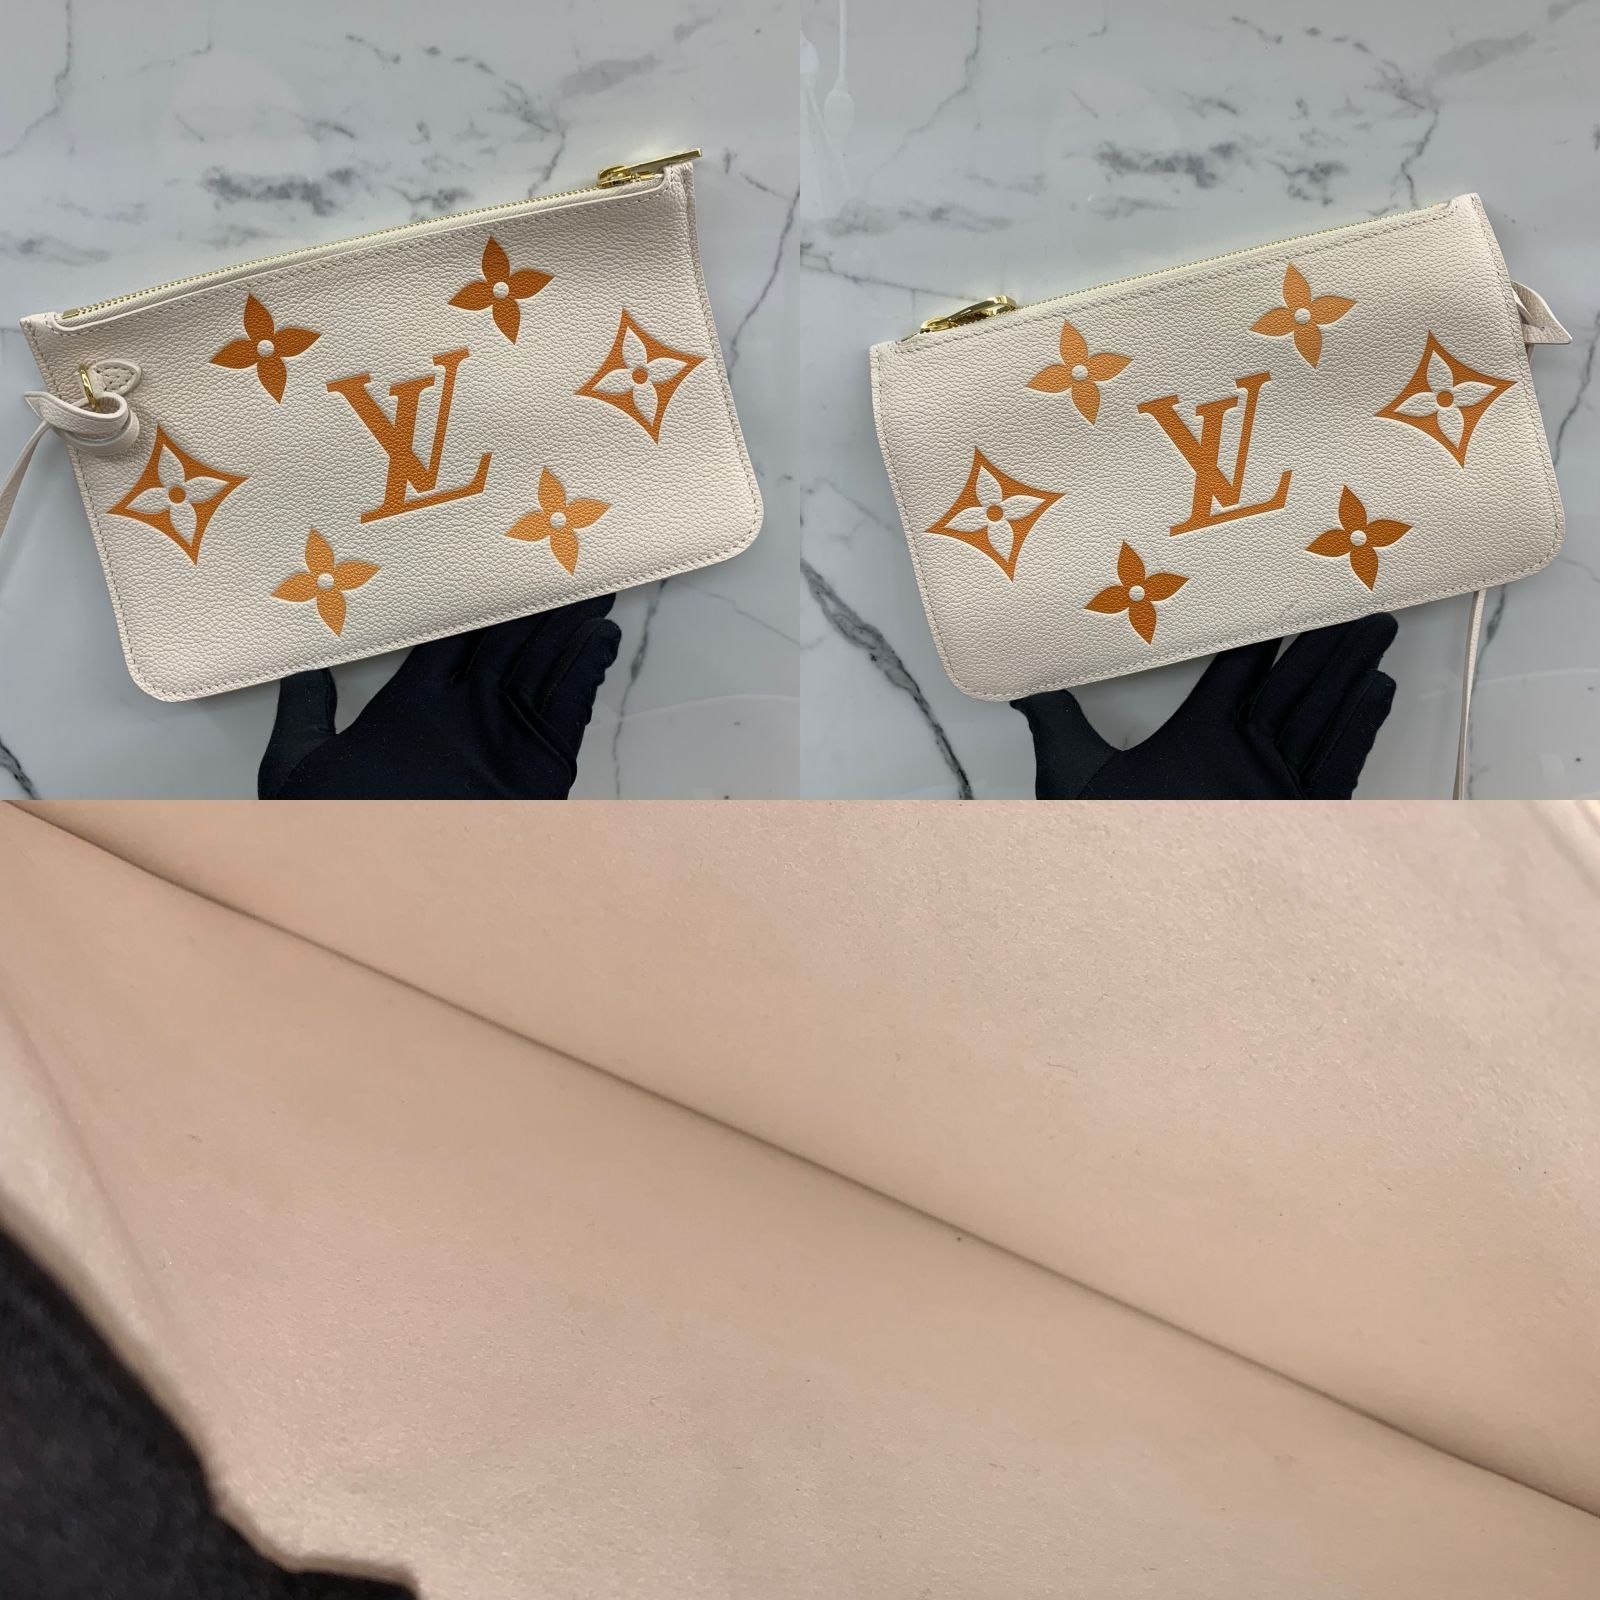 Louis Vuitton LV Neverfull MM Monogram Empreinte Leather Bag (M46516)  $2,850